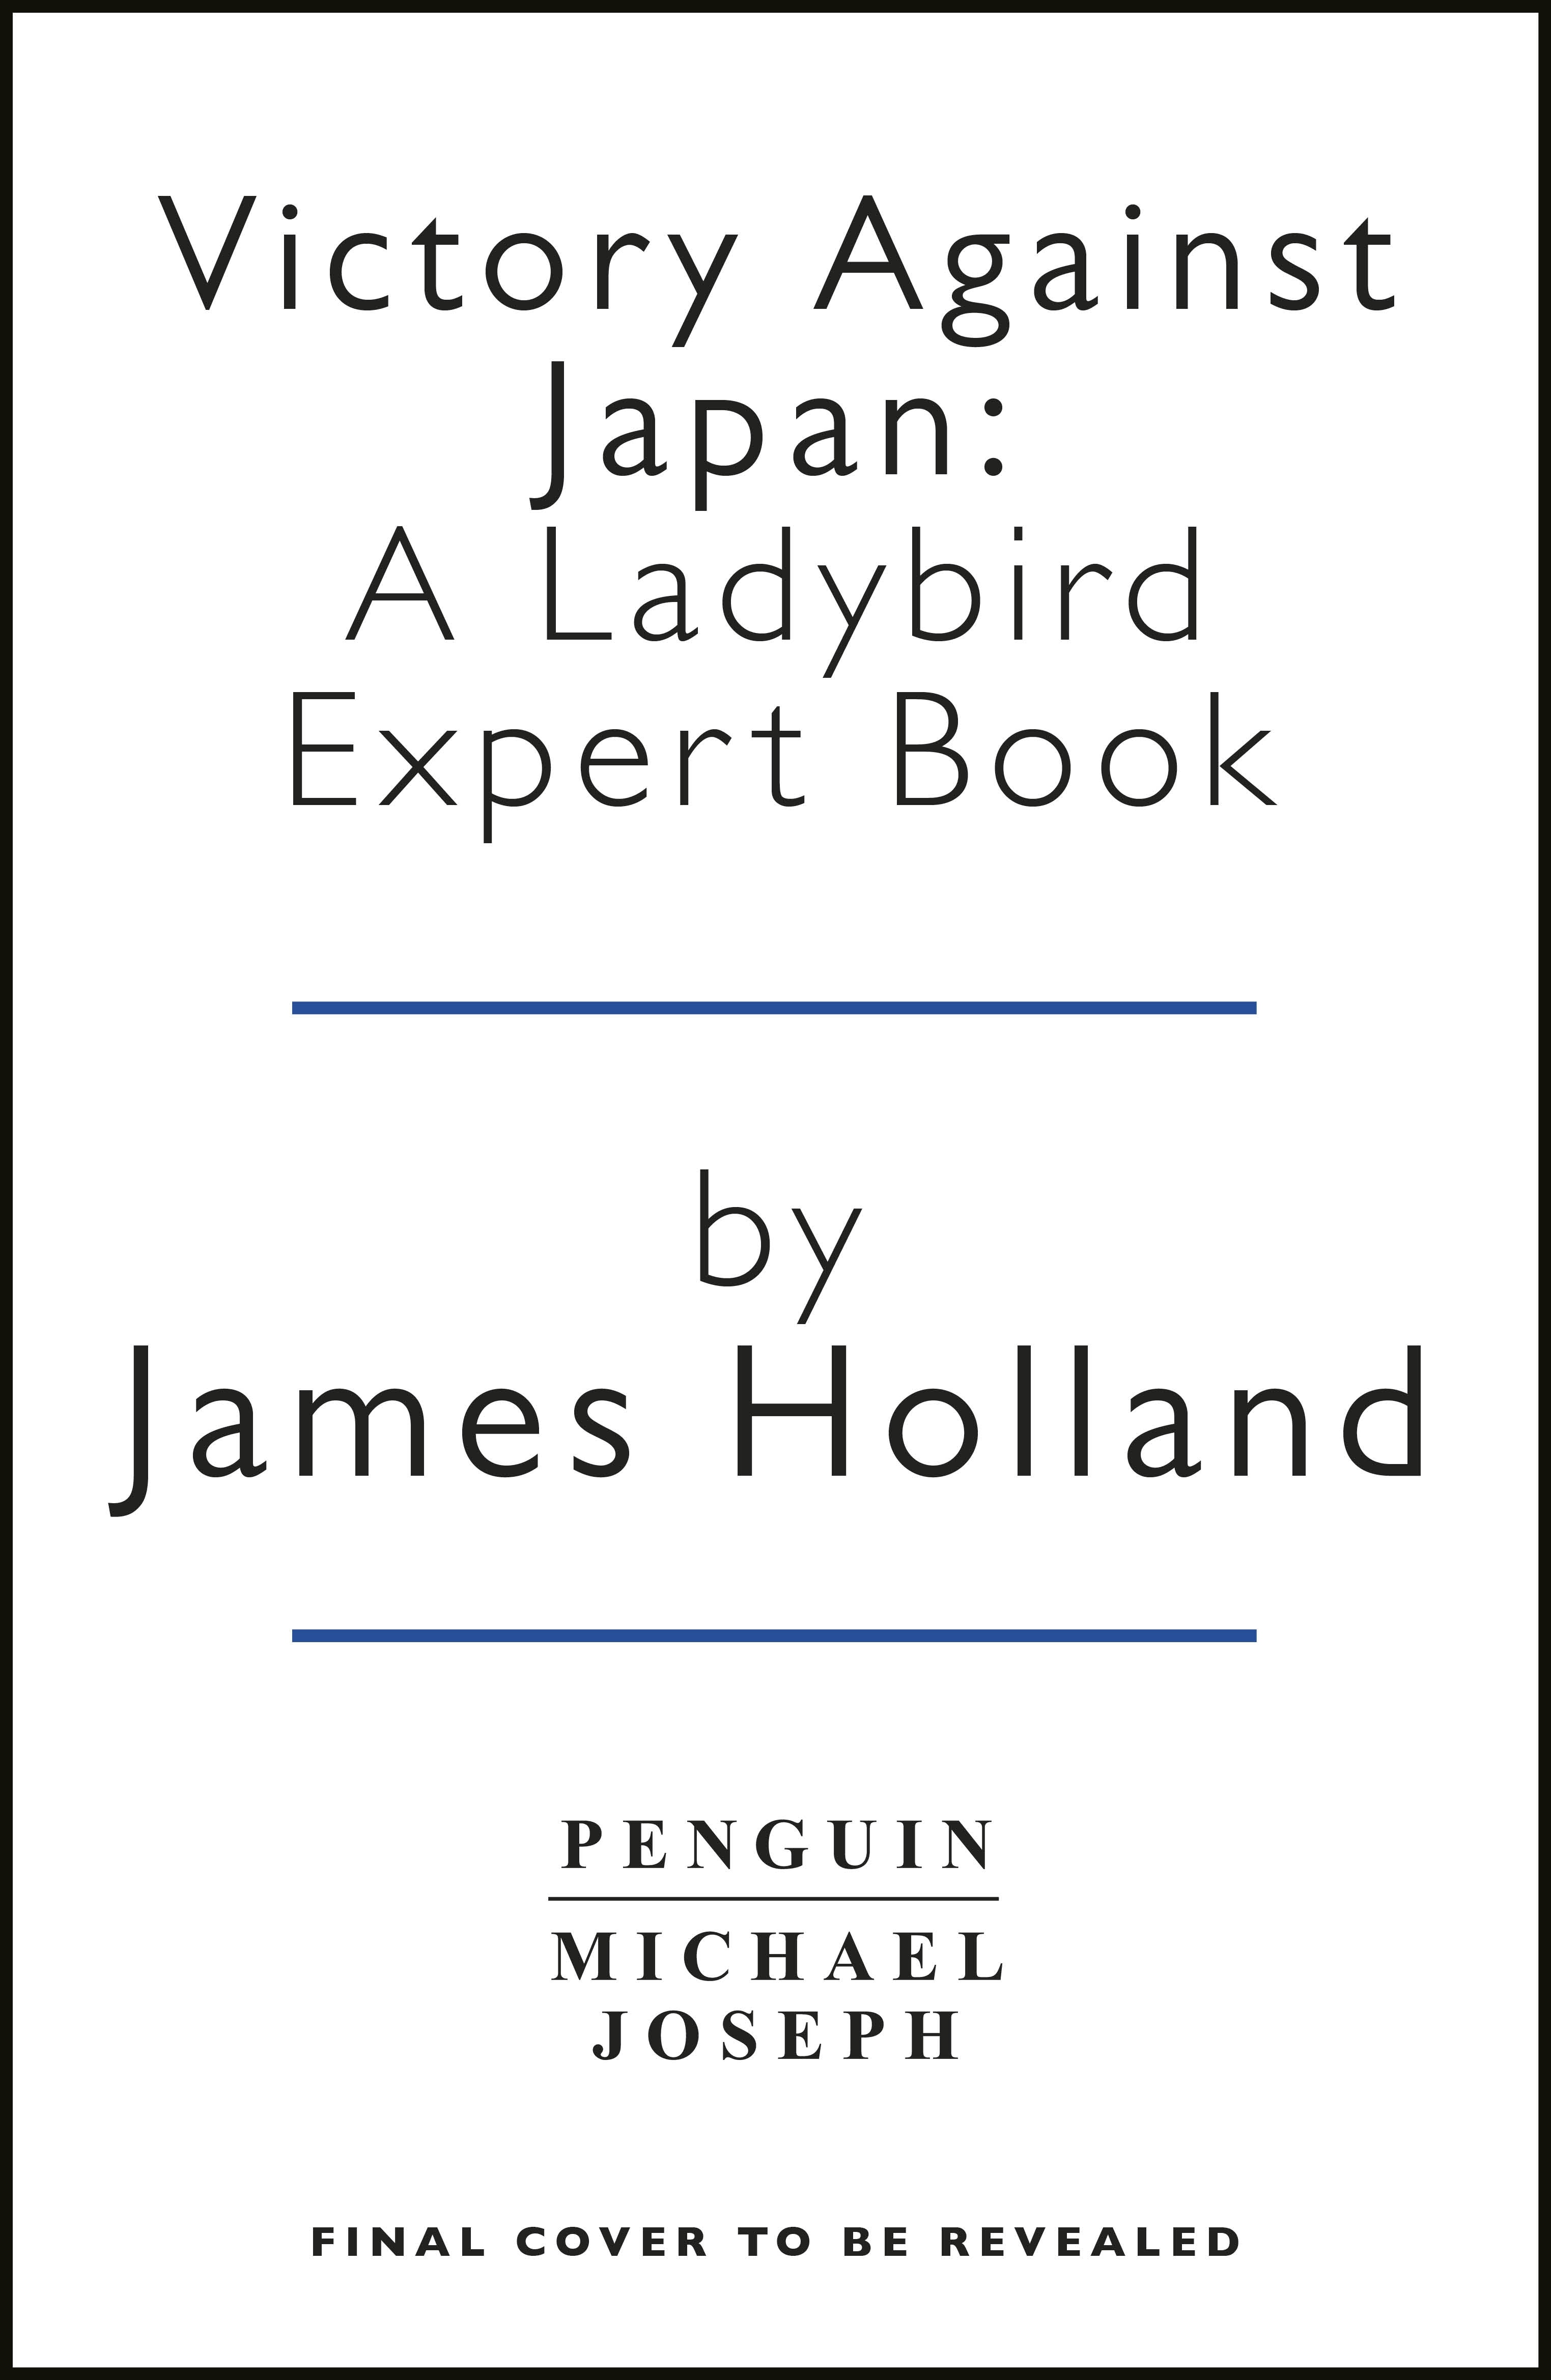 Book “Victory Against Japan: A Ladybird Expert Book” by James Holland — September 1, 2022